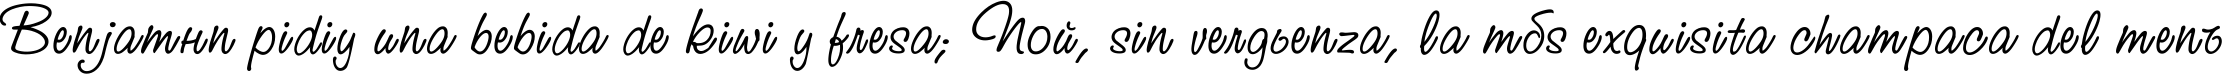 Пример написания шрифтом StudioScriptCTT текста на испанском